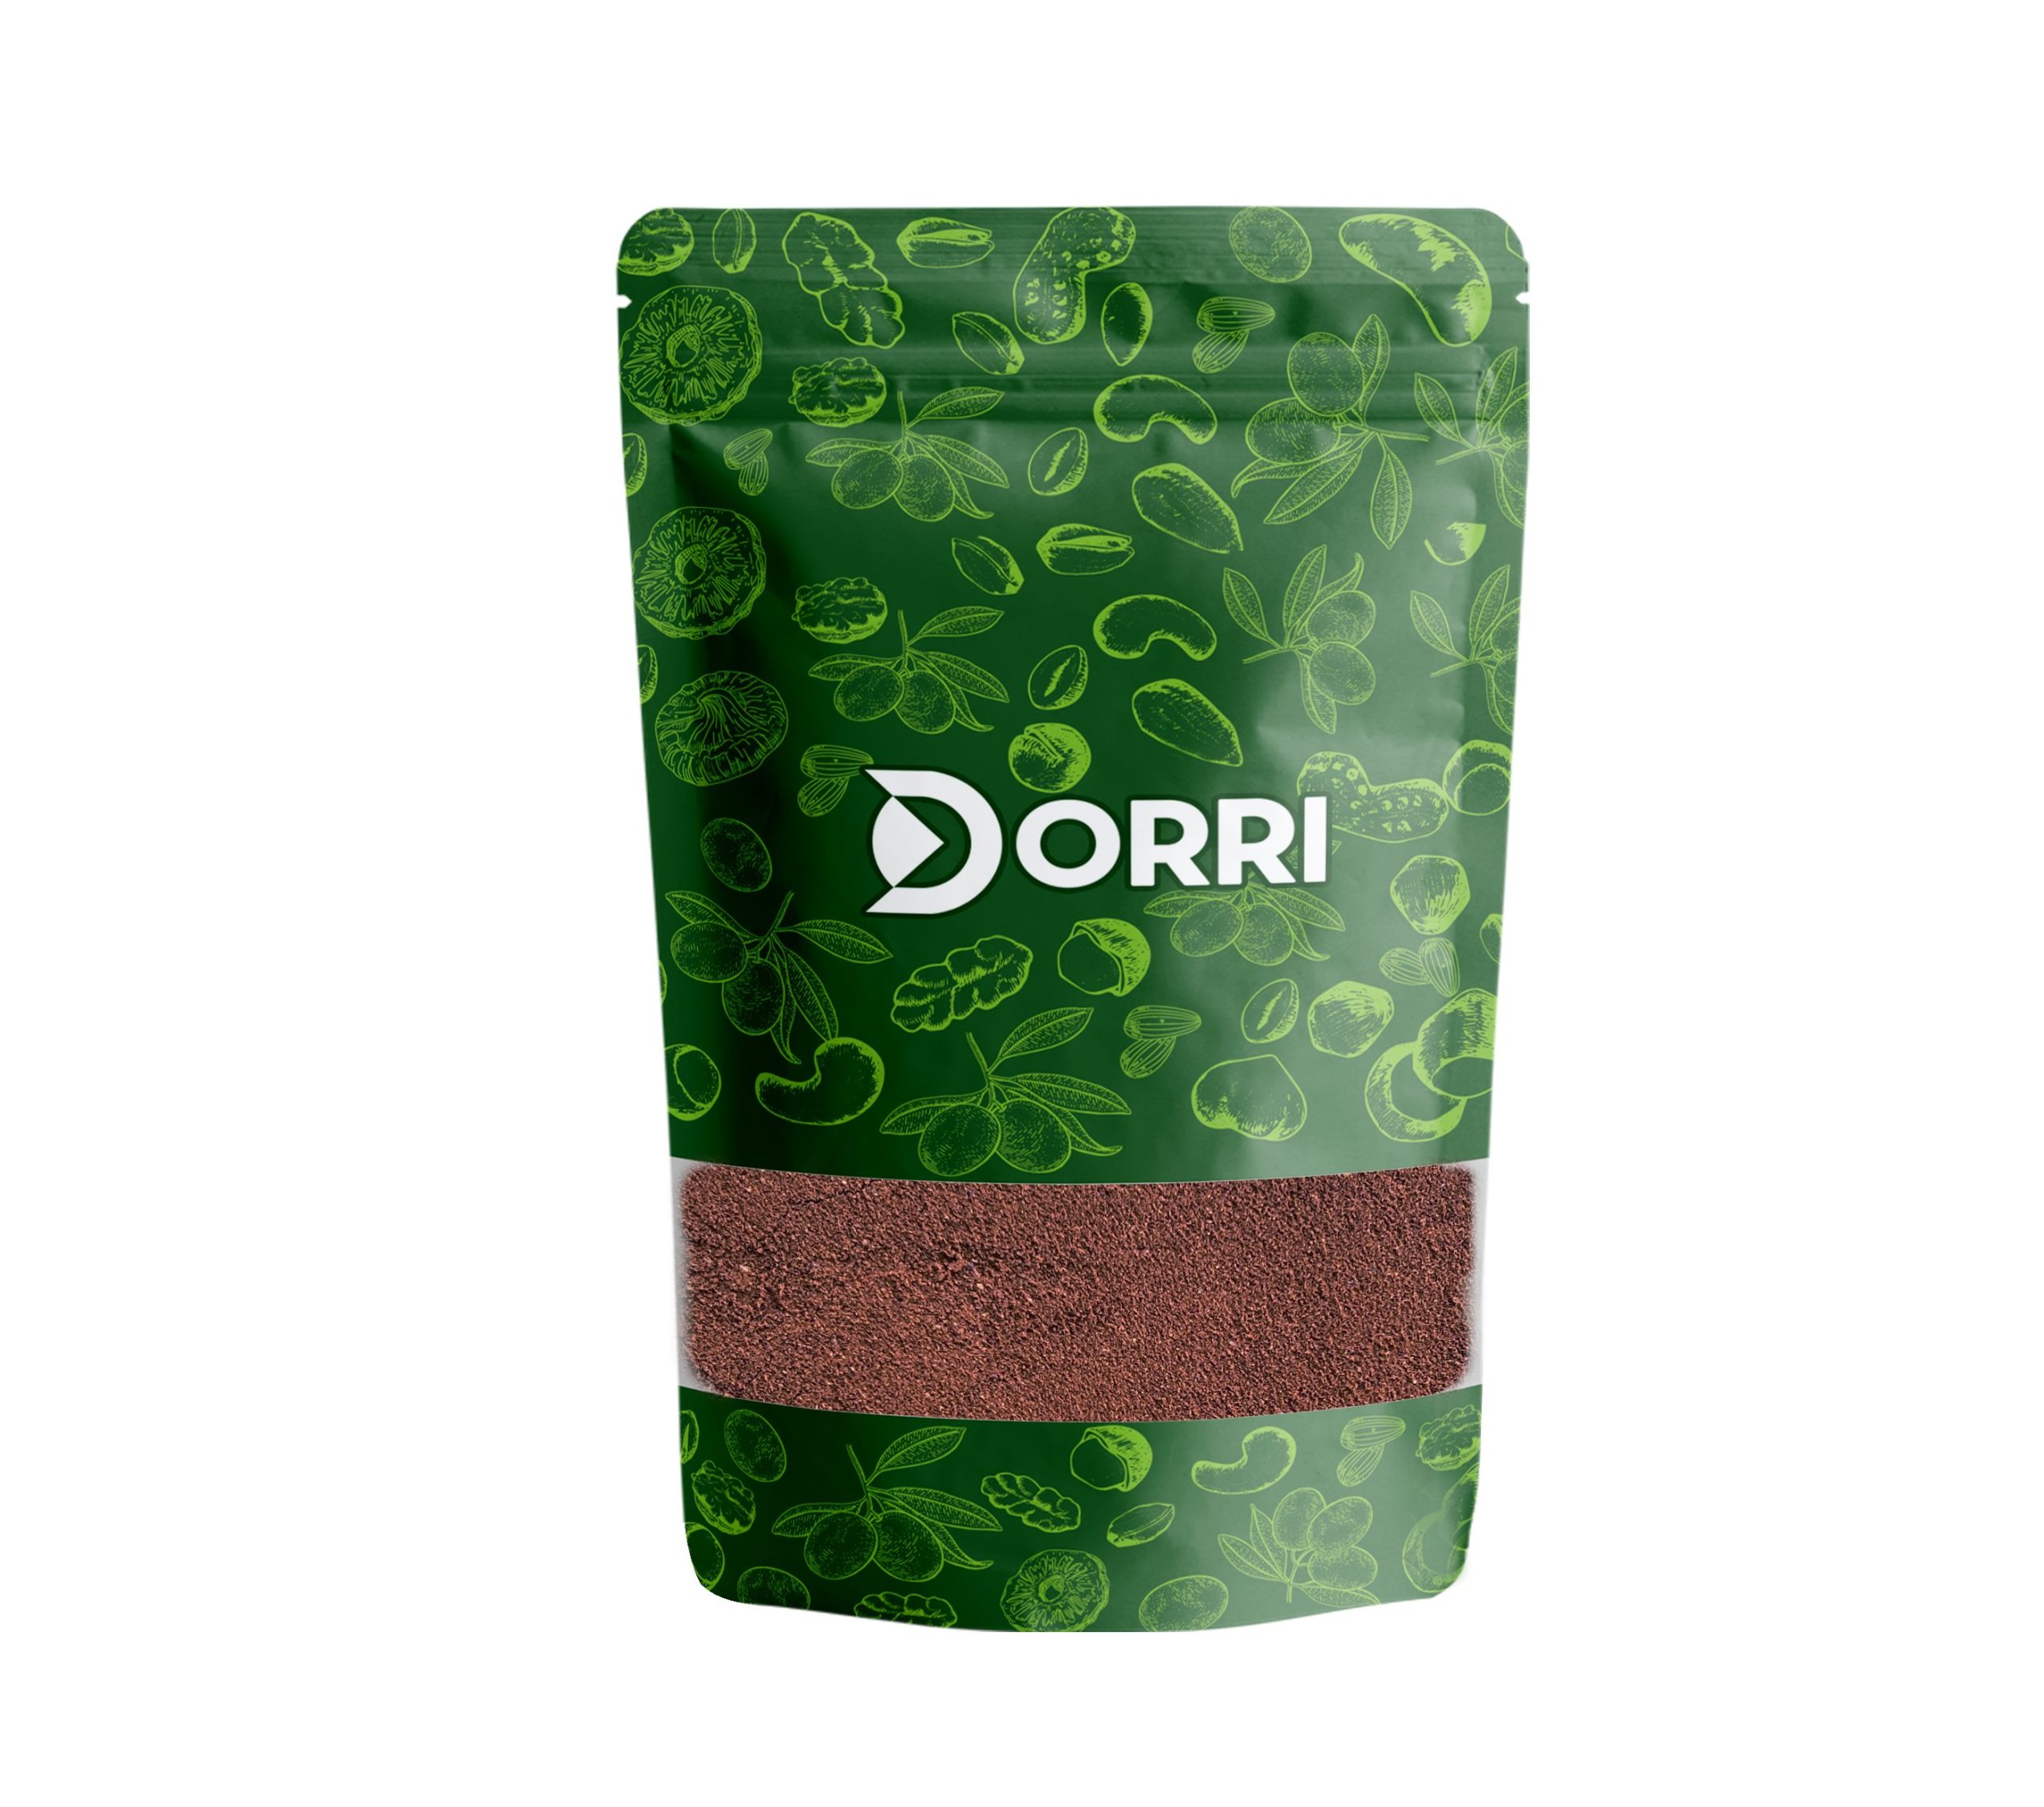 Dorri - Turkish Coffee